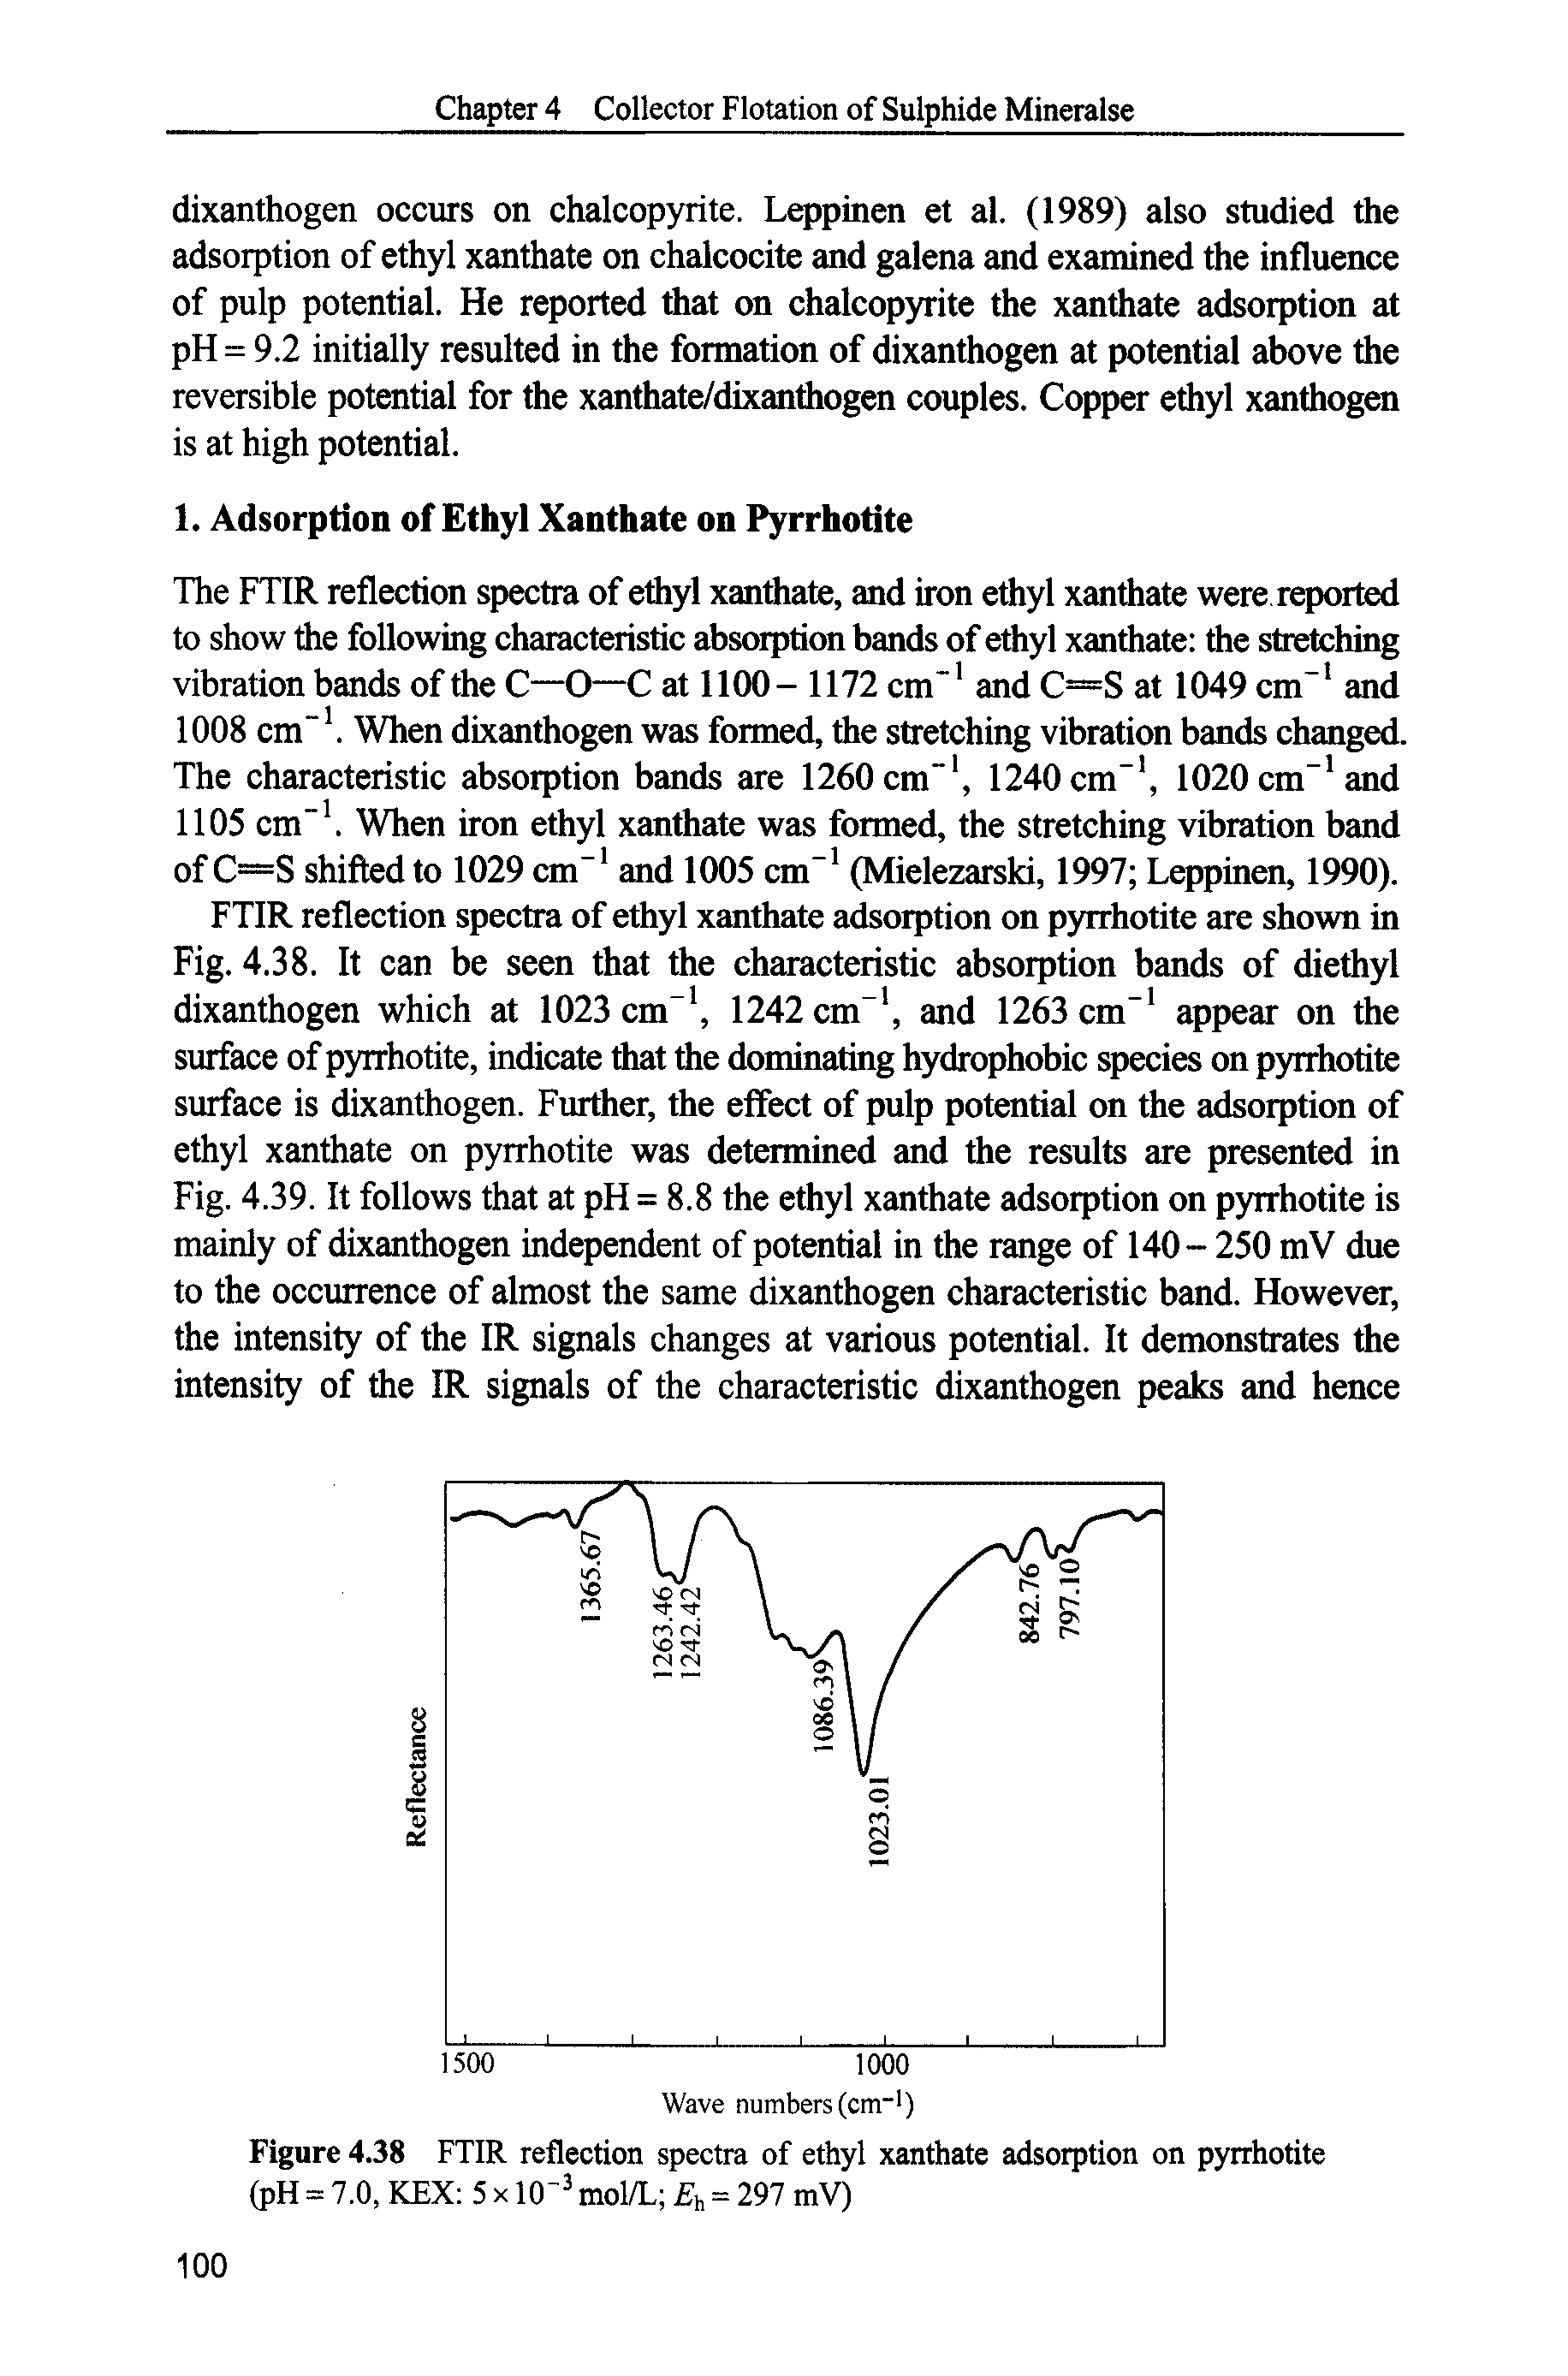 Figure 4.38 FTIR reflection spectra of ethyl xanthate adsorption on pyrrhotite (pH = 7.0, KEX 5 x 10 mol/L = 297 mV)...